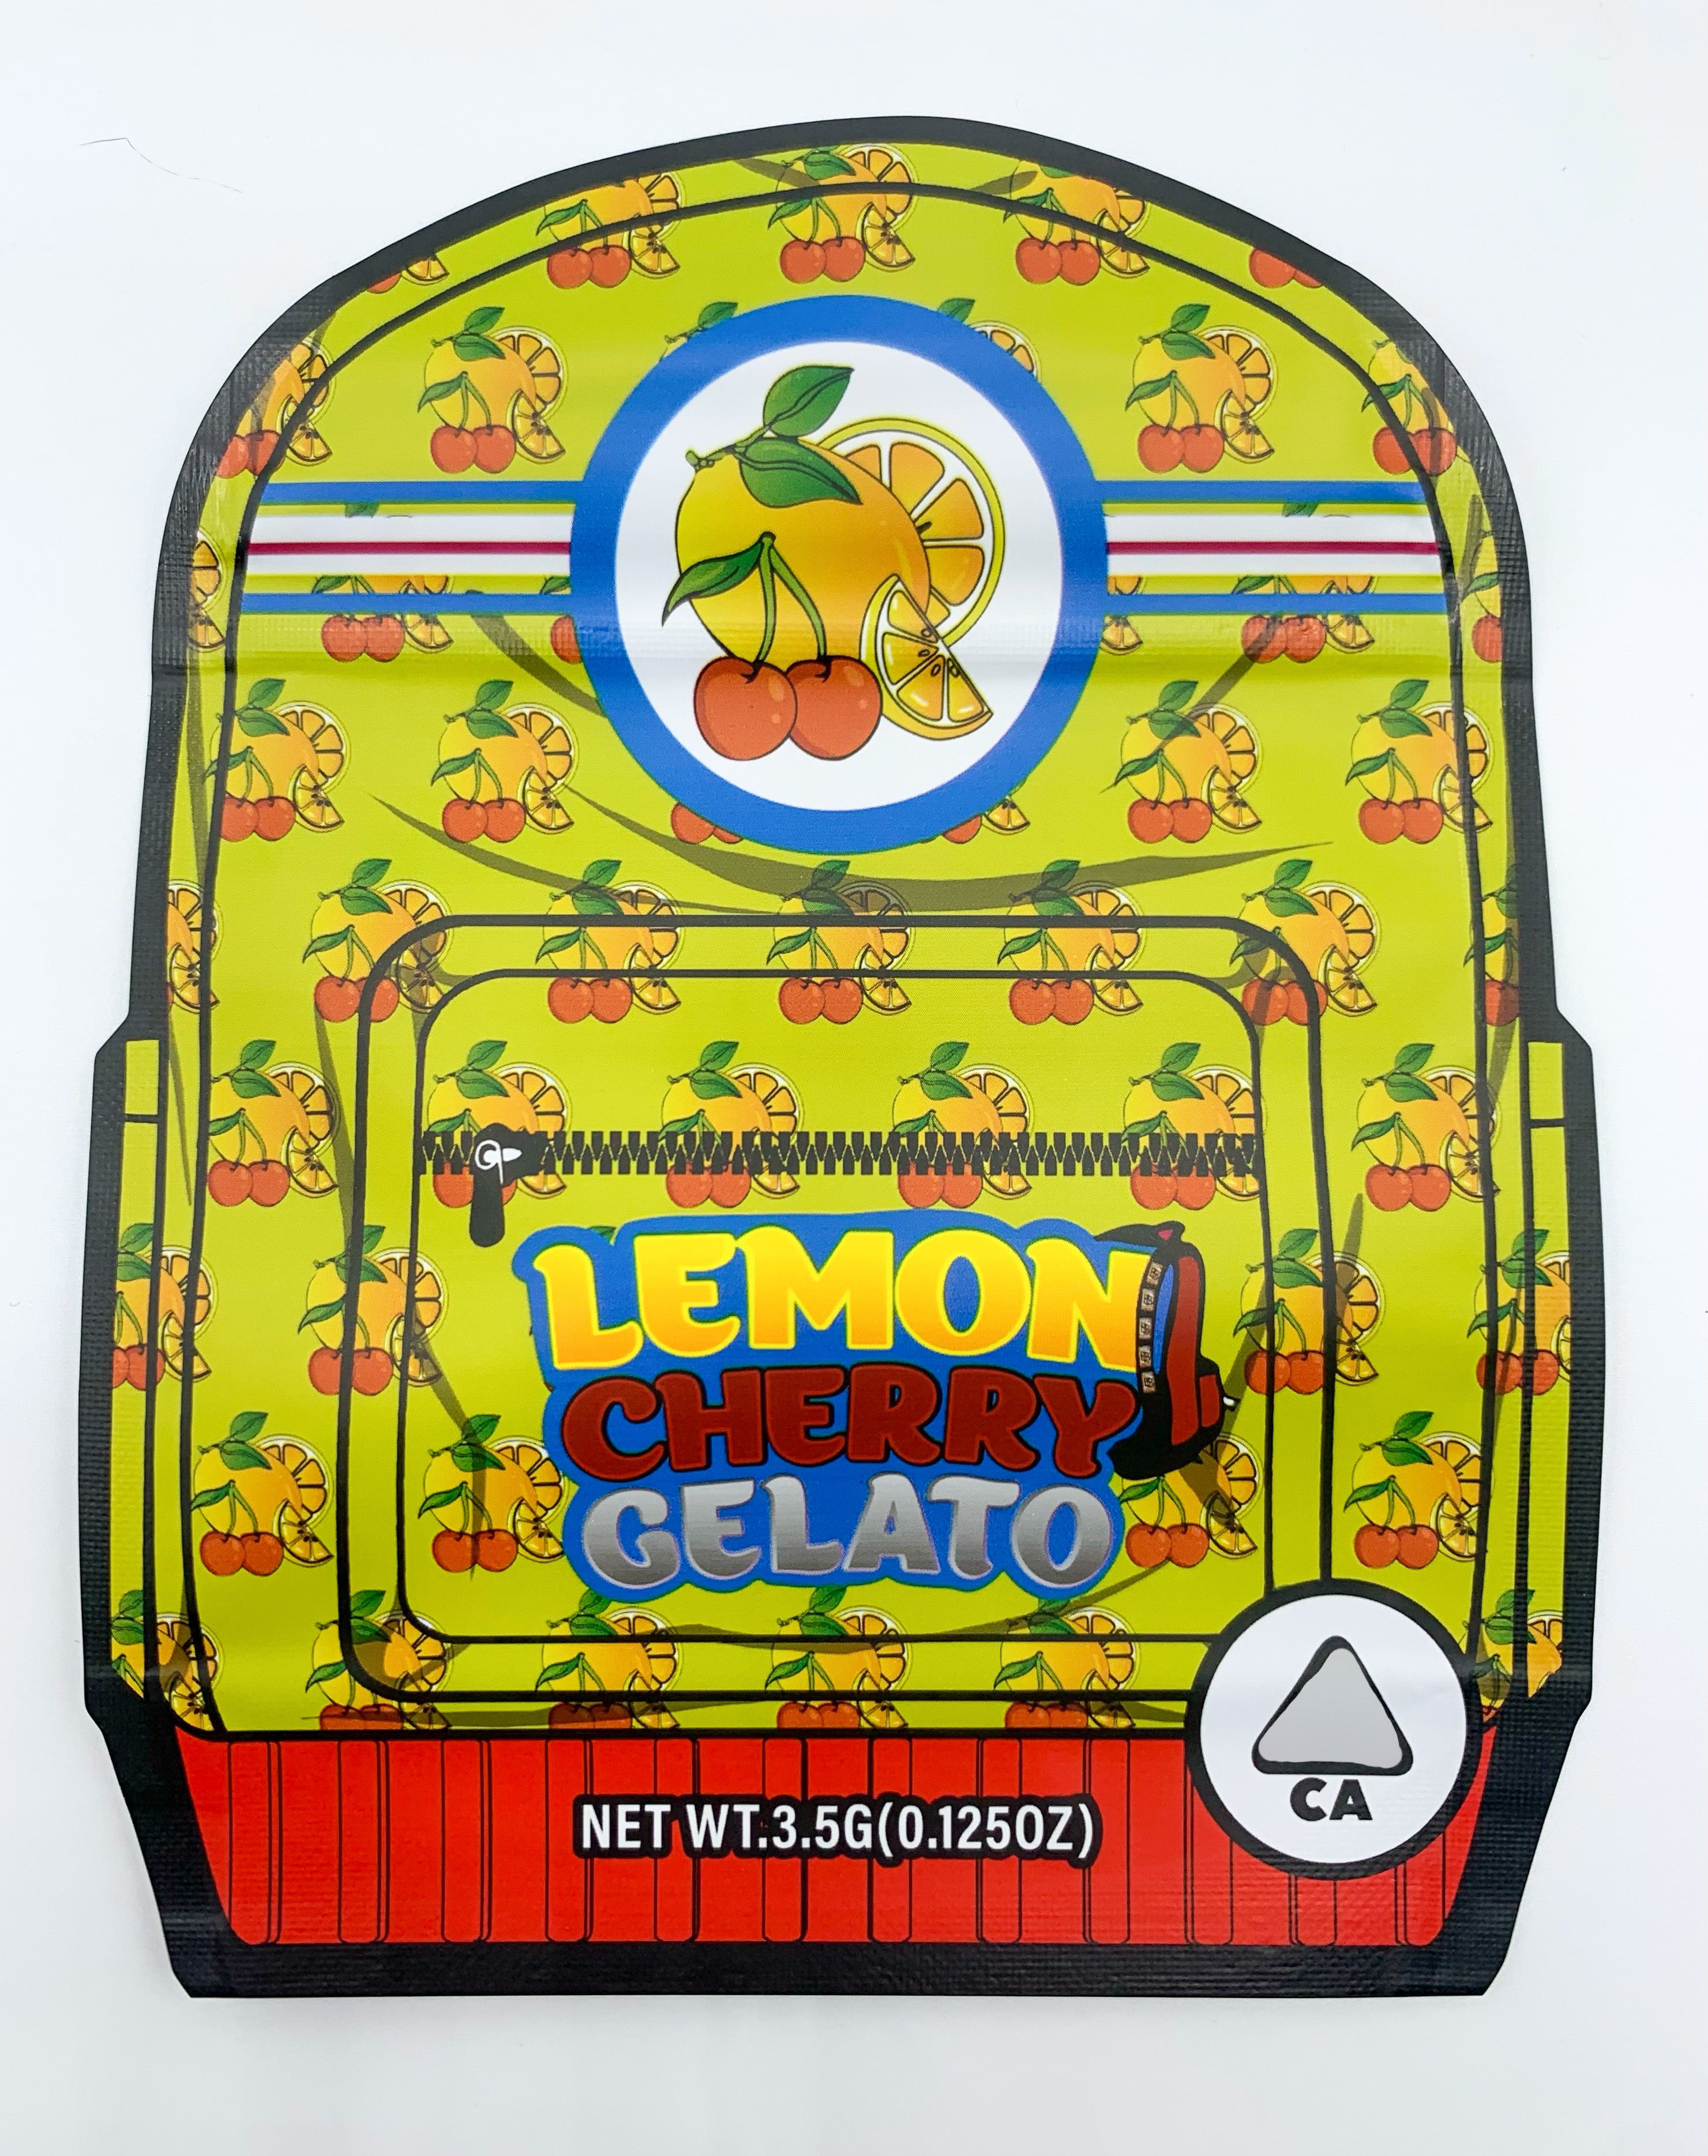 3D Backpackboyz Lemon Cherry Gelato 3.5g Mylar bags